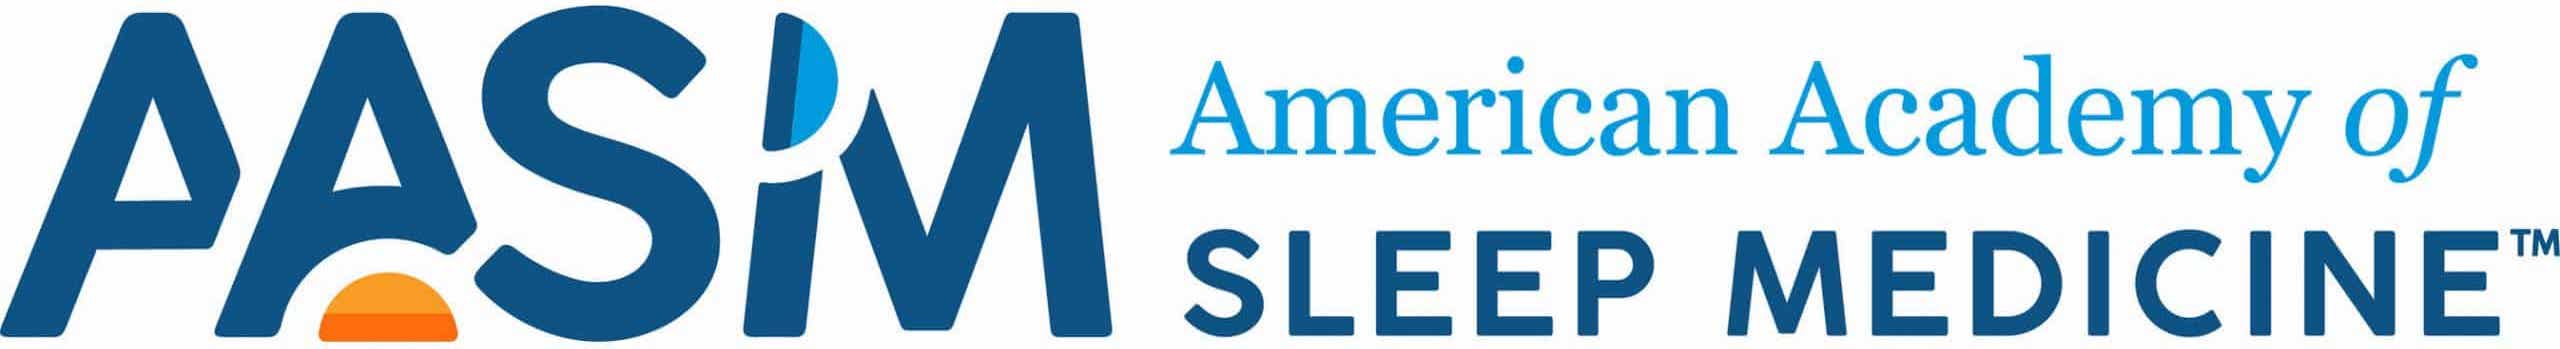 American Academy of Sleep Medicine logo